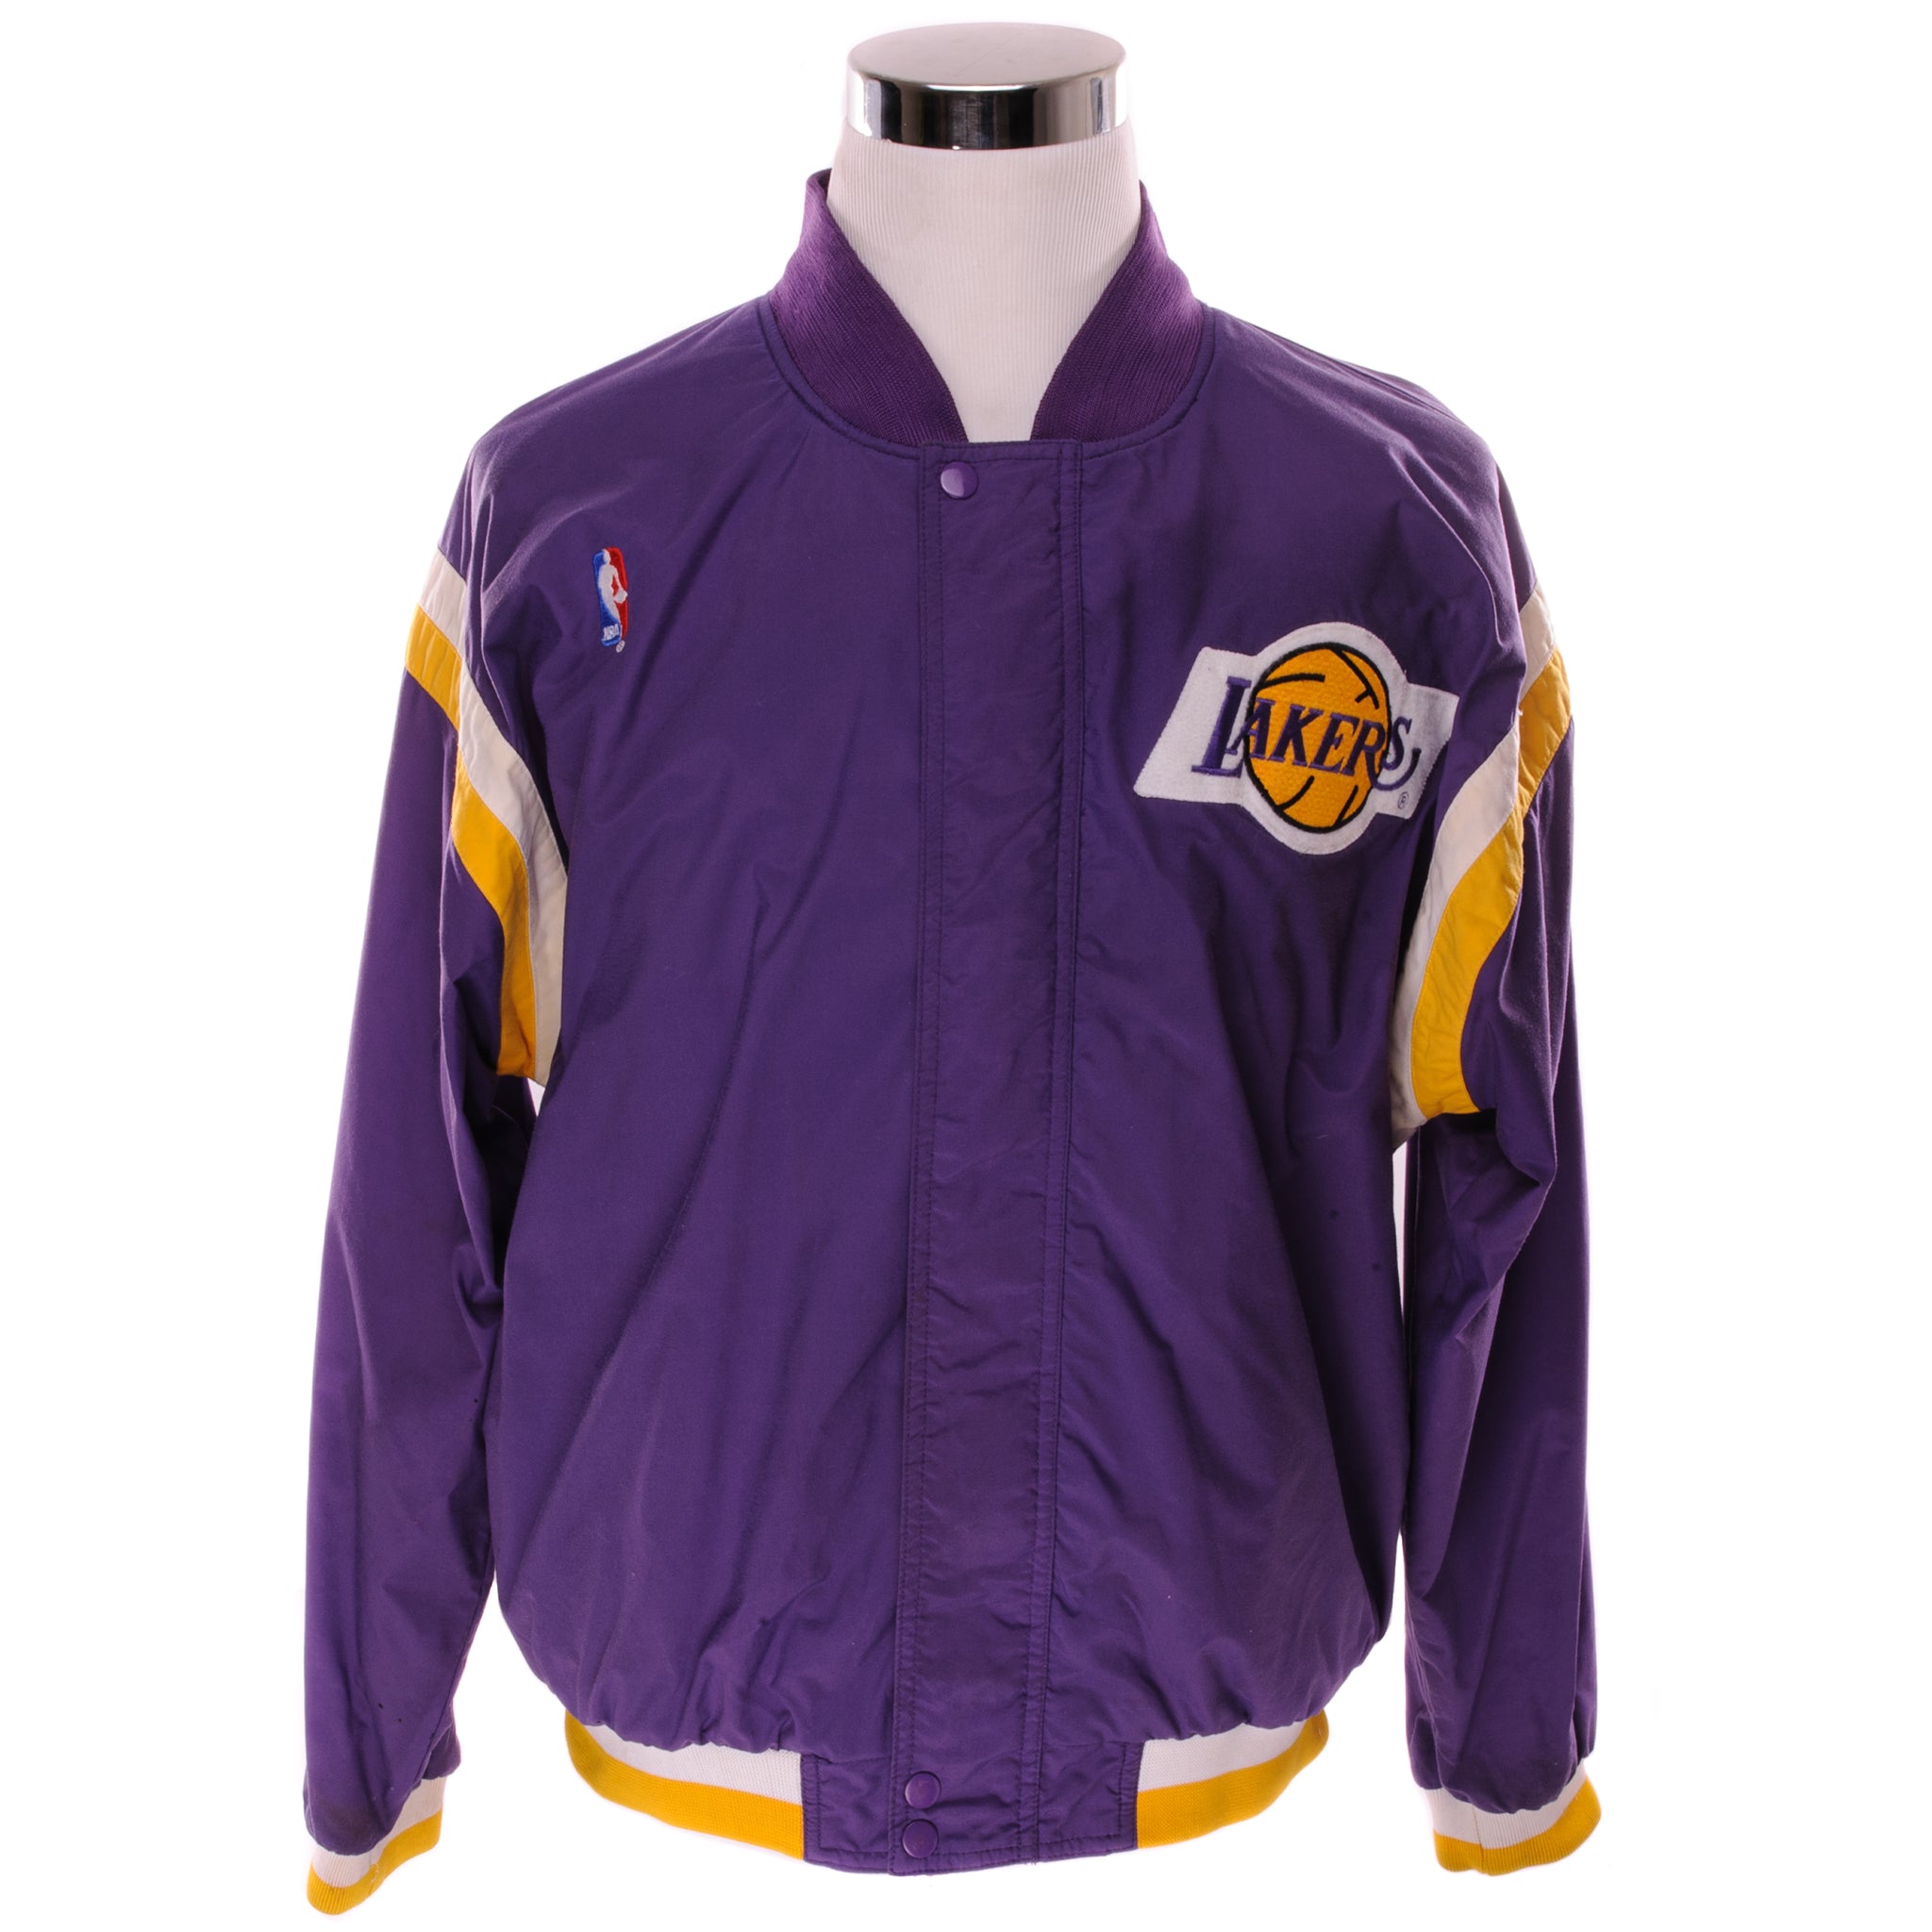 Los Angeles Lakers 2000 Championship Jacket